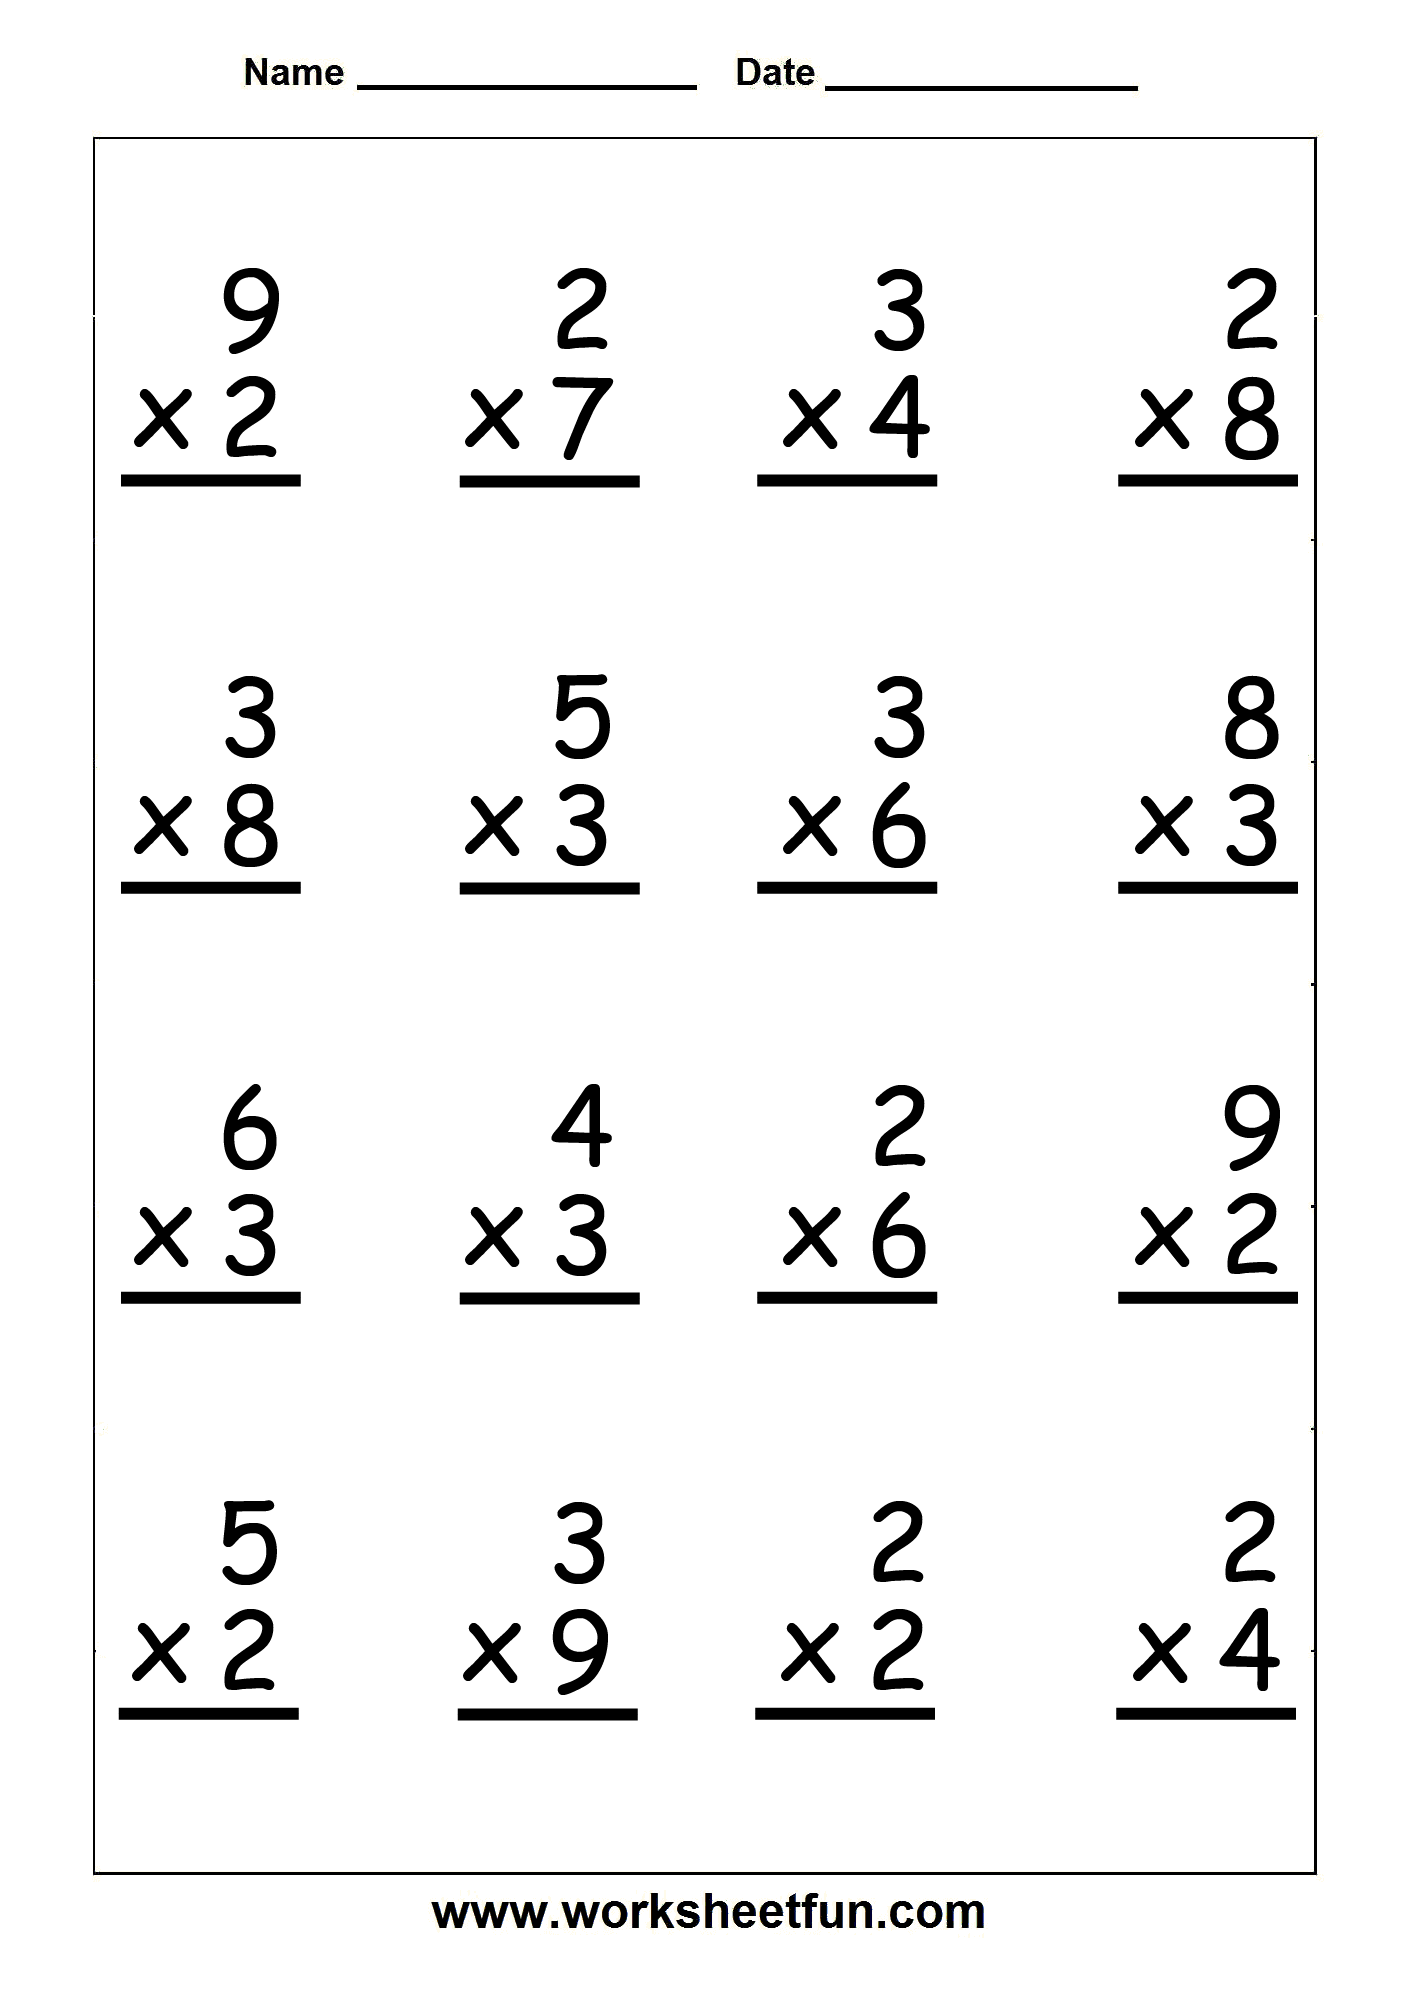 multiplication-worksheet-1-12-multiplication-worksheets-math-worksheets-printable